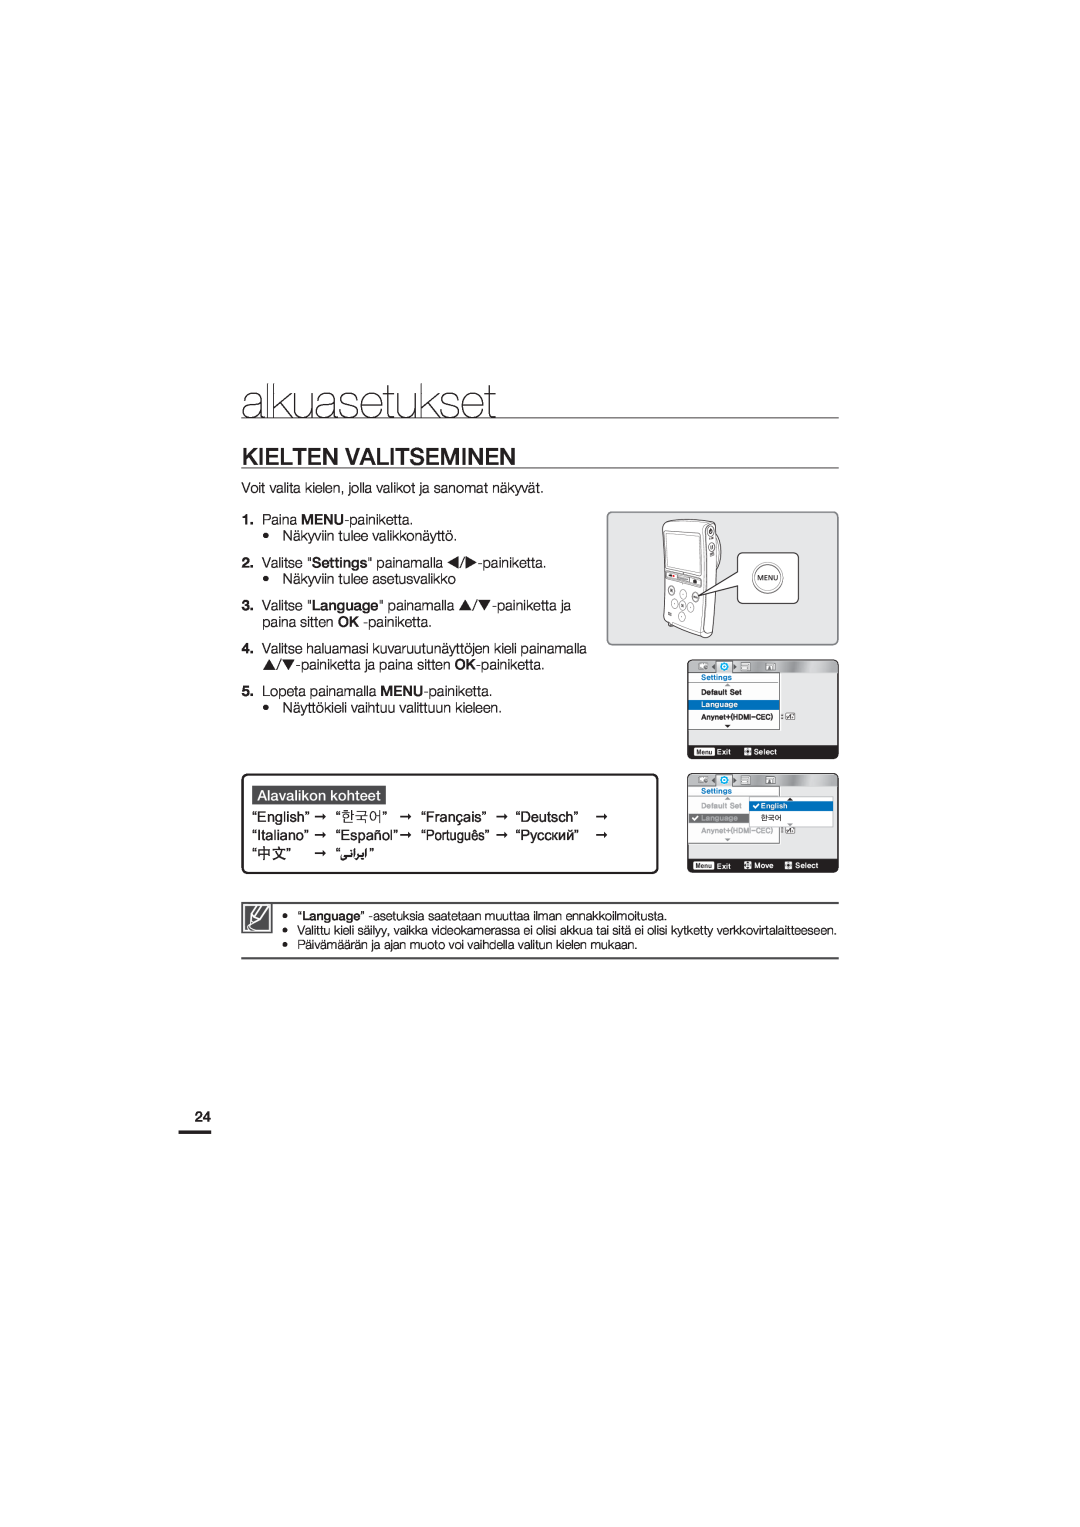 Samsung HMX-U20BP/EDC manual Kielten Valitseminen, Alavalikon kohteet, alkuasetukset 